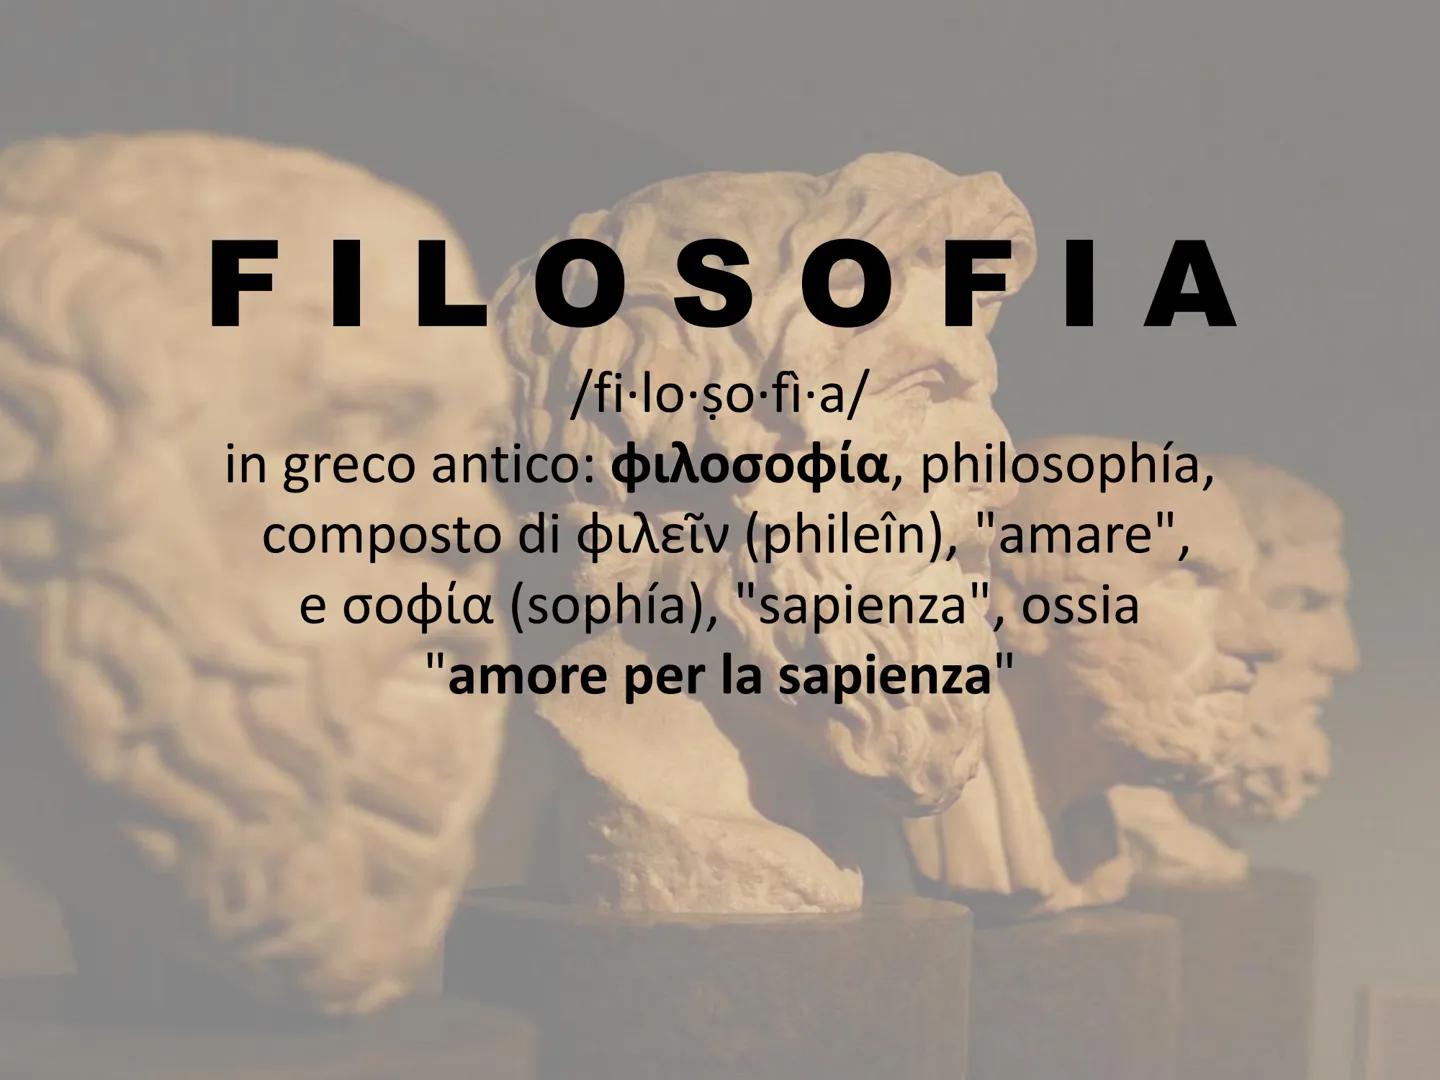 FILOSOFIA
/fi-lo-so-fi-a/
in greco antico: pλooopía, philosophía,
composto di puλeiv (phileîn), "amare",
e oopía (sophía), "sapienza", ossia